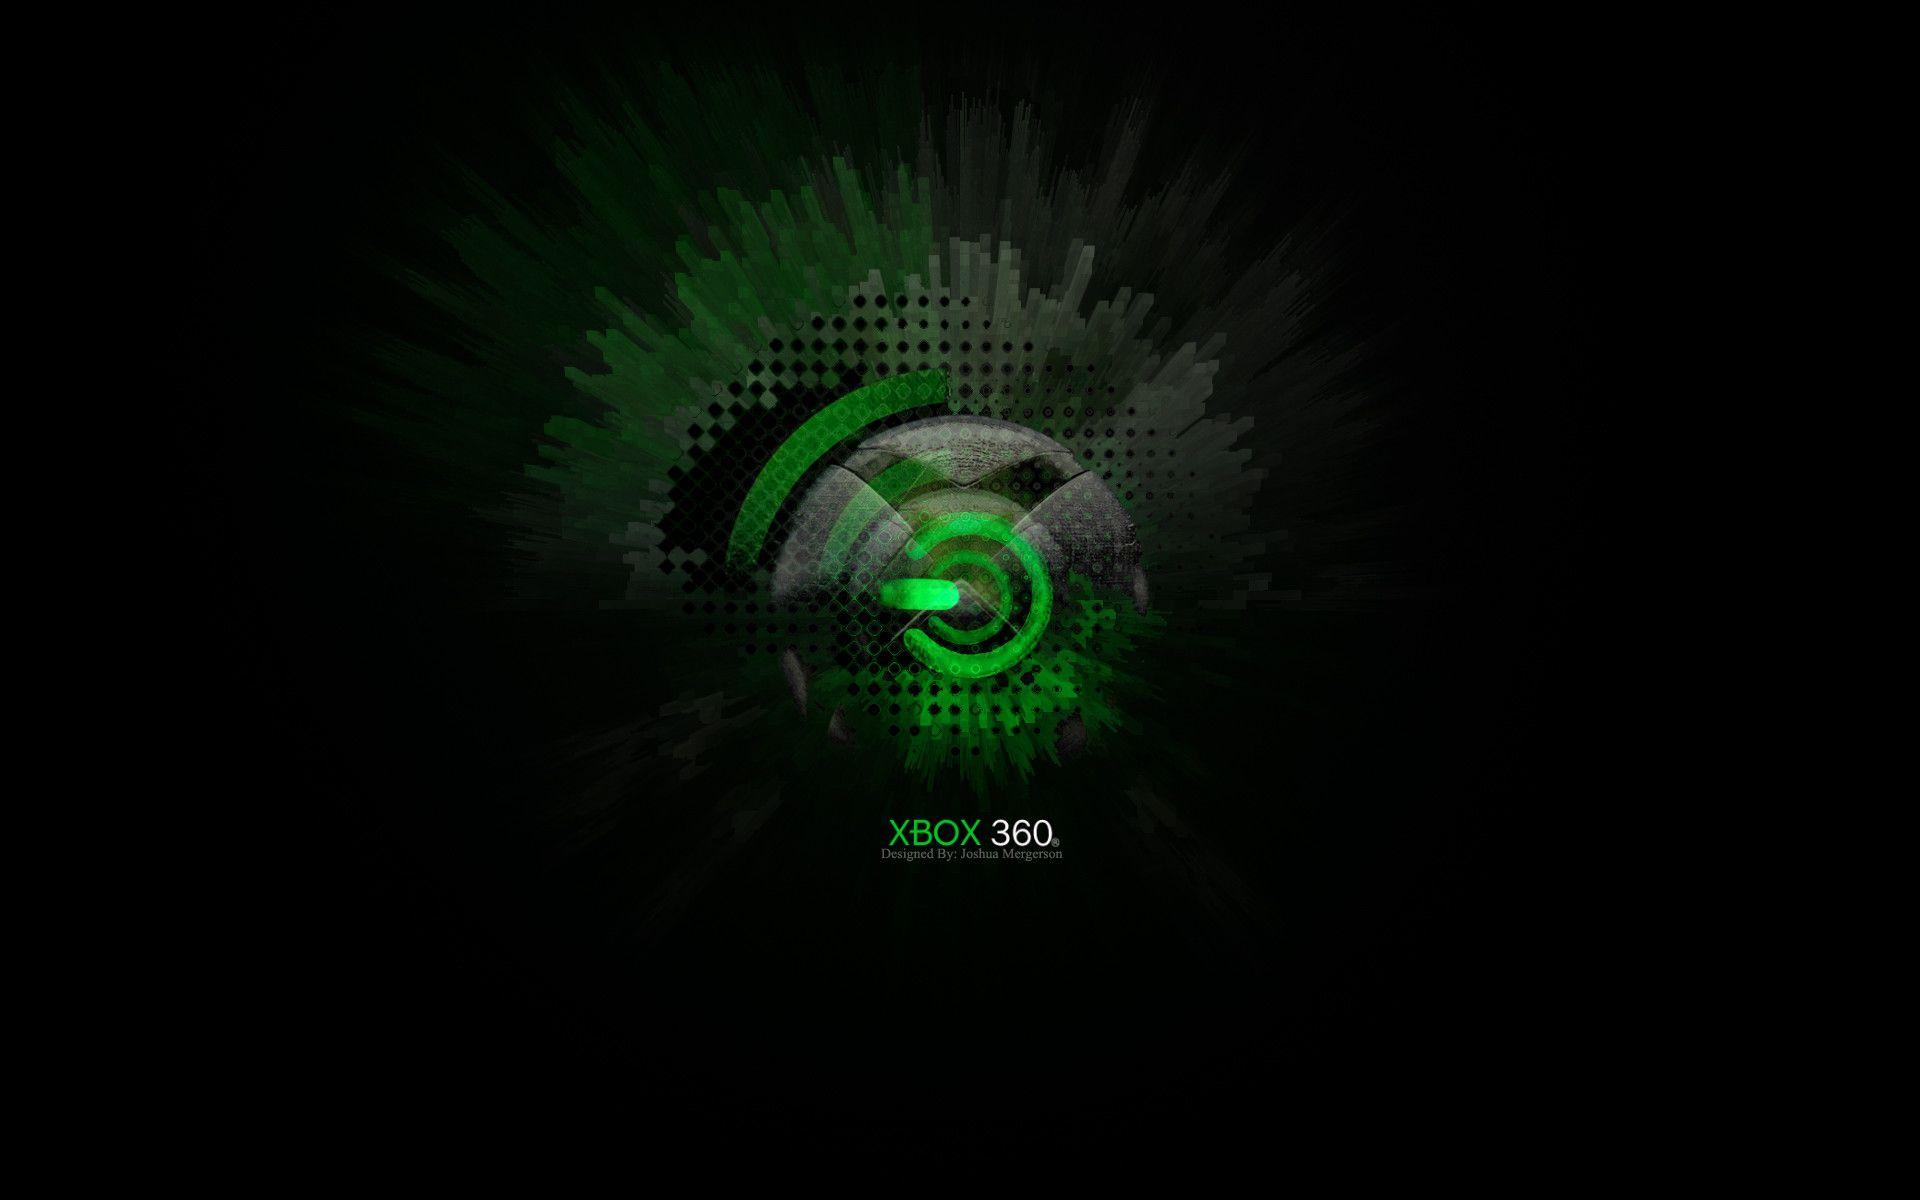 Xbox 360 Logo HD Wallpaper. Beautiful image HD Picture & Desktop